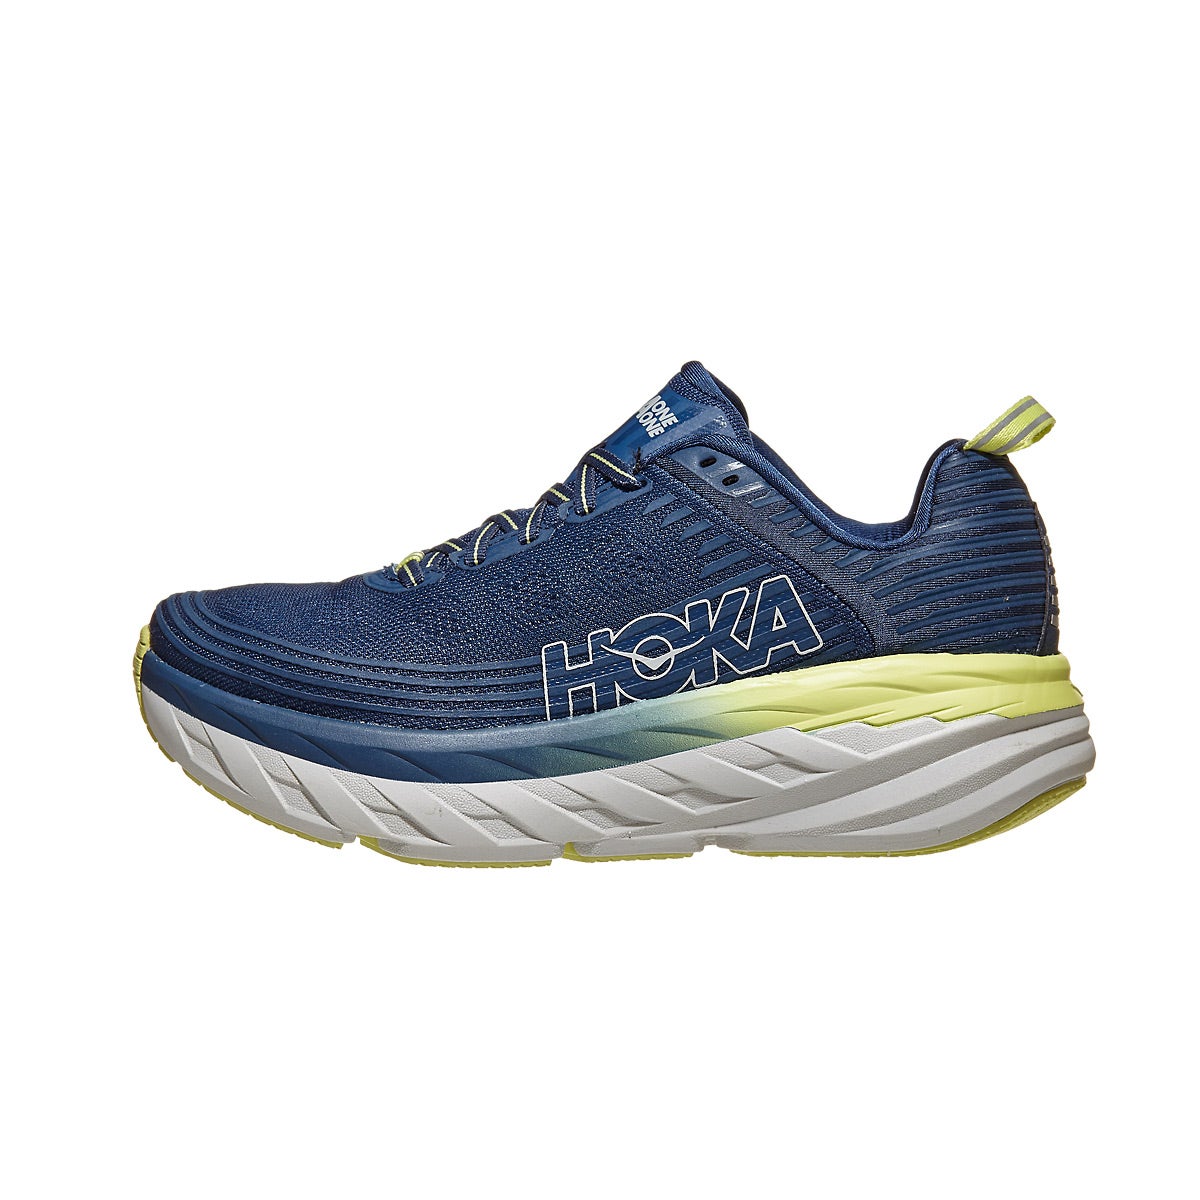 HOKA ONE ONE Bondi 6 Women's Shoes Ensign Blue/Lime 360° View | Running ...